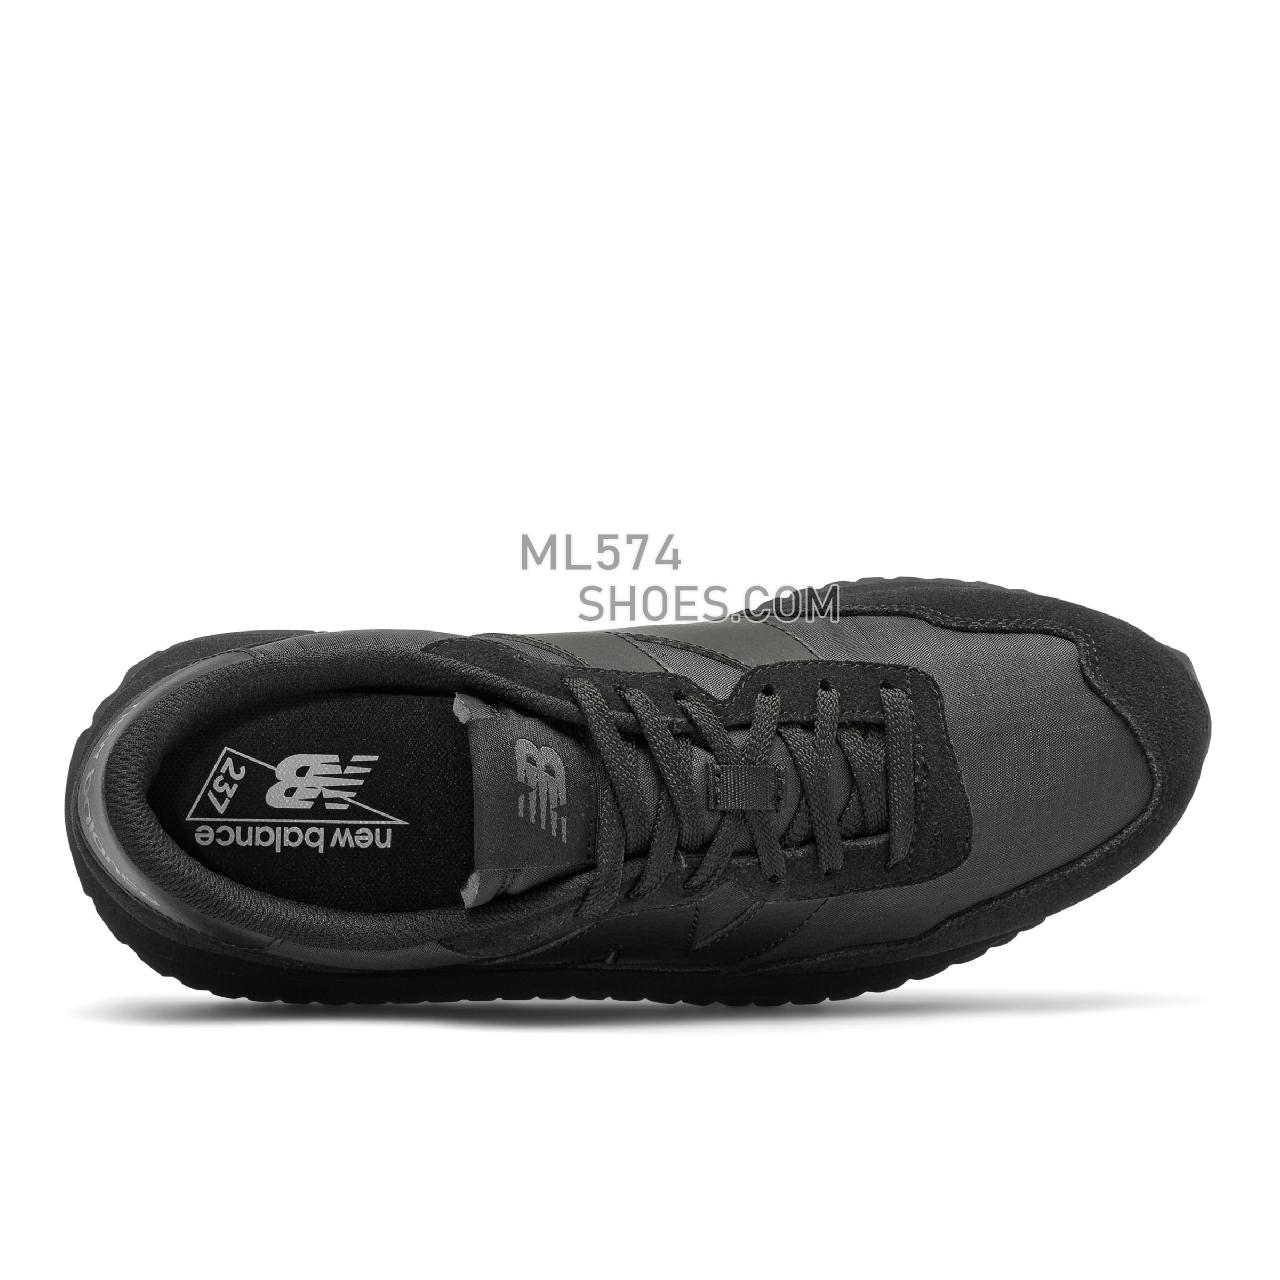 New Balance 237 - Men's Sport Style Sneakers - Black - MS237UX1